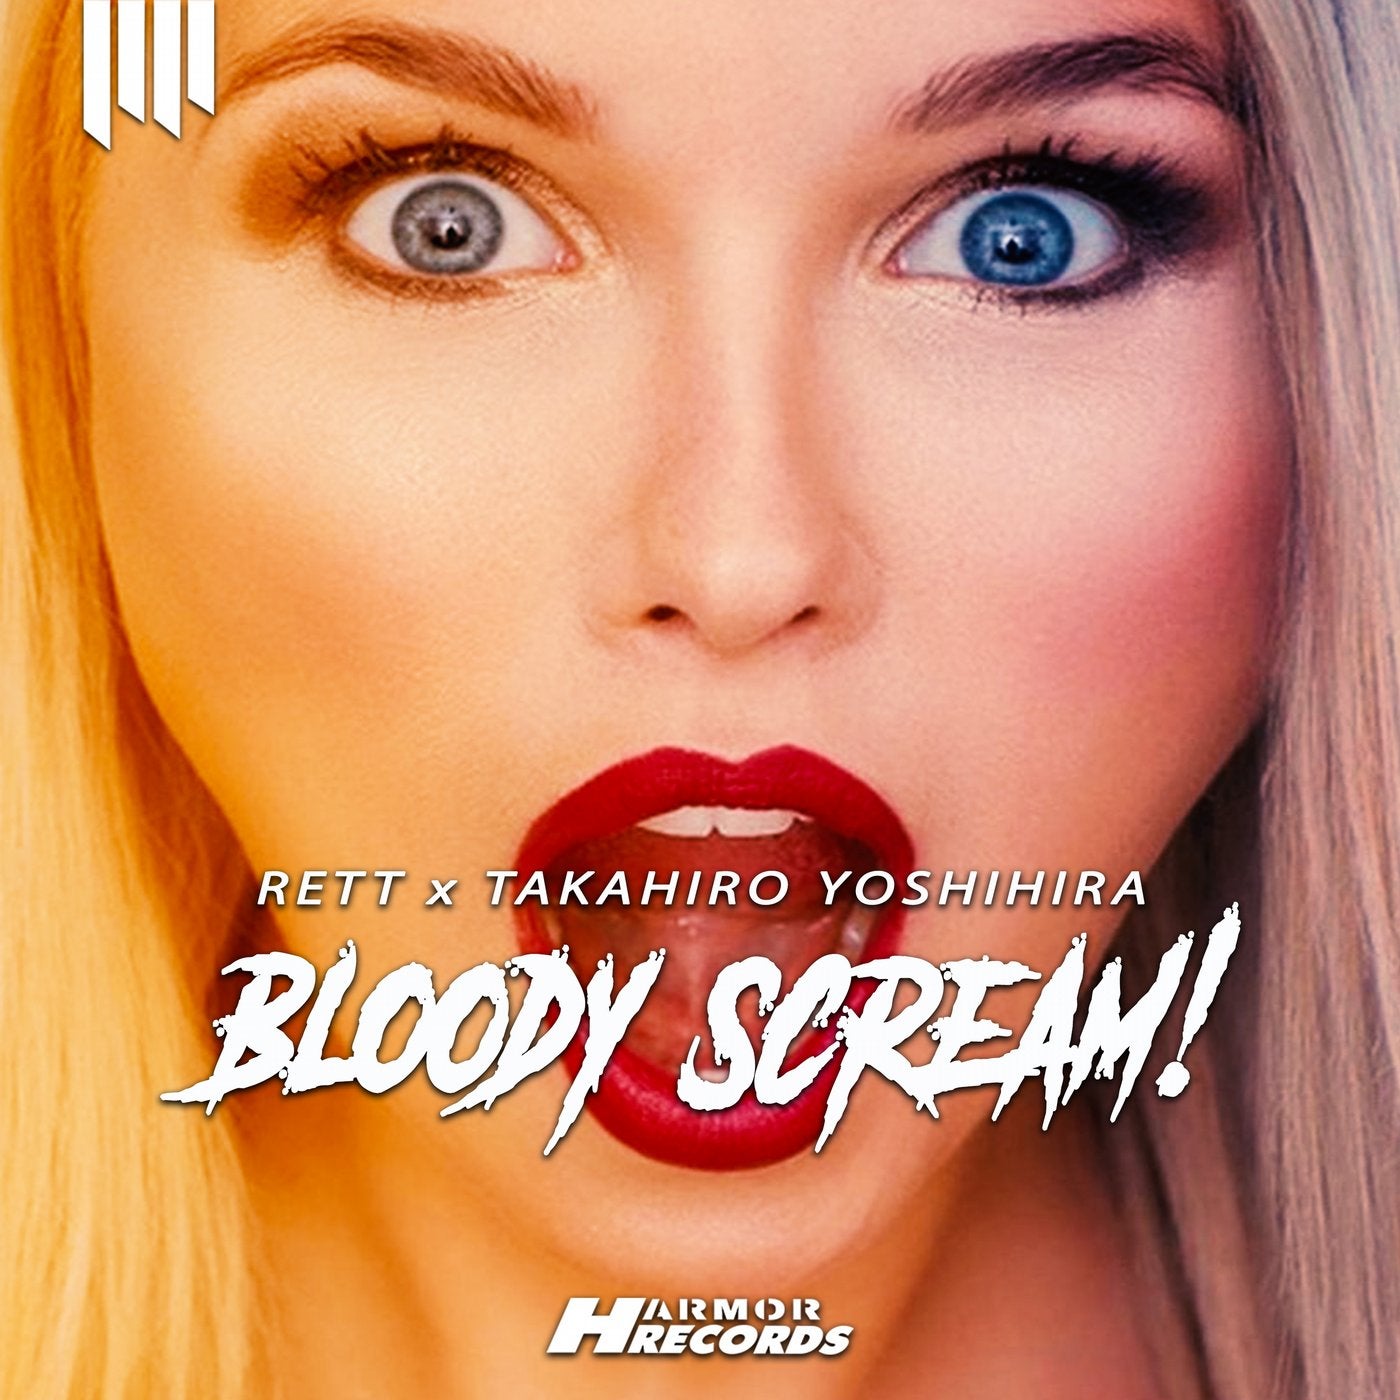 Bloody Scream!